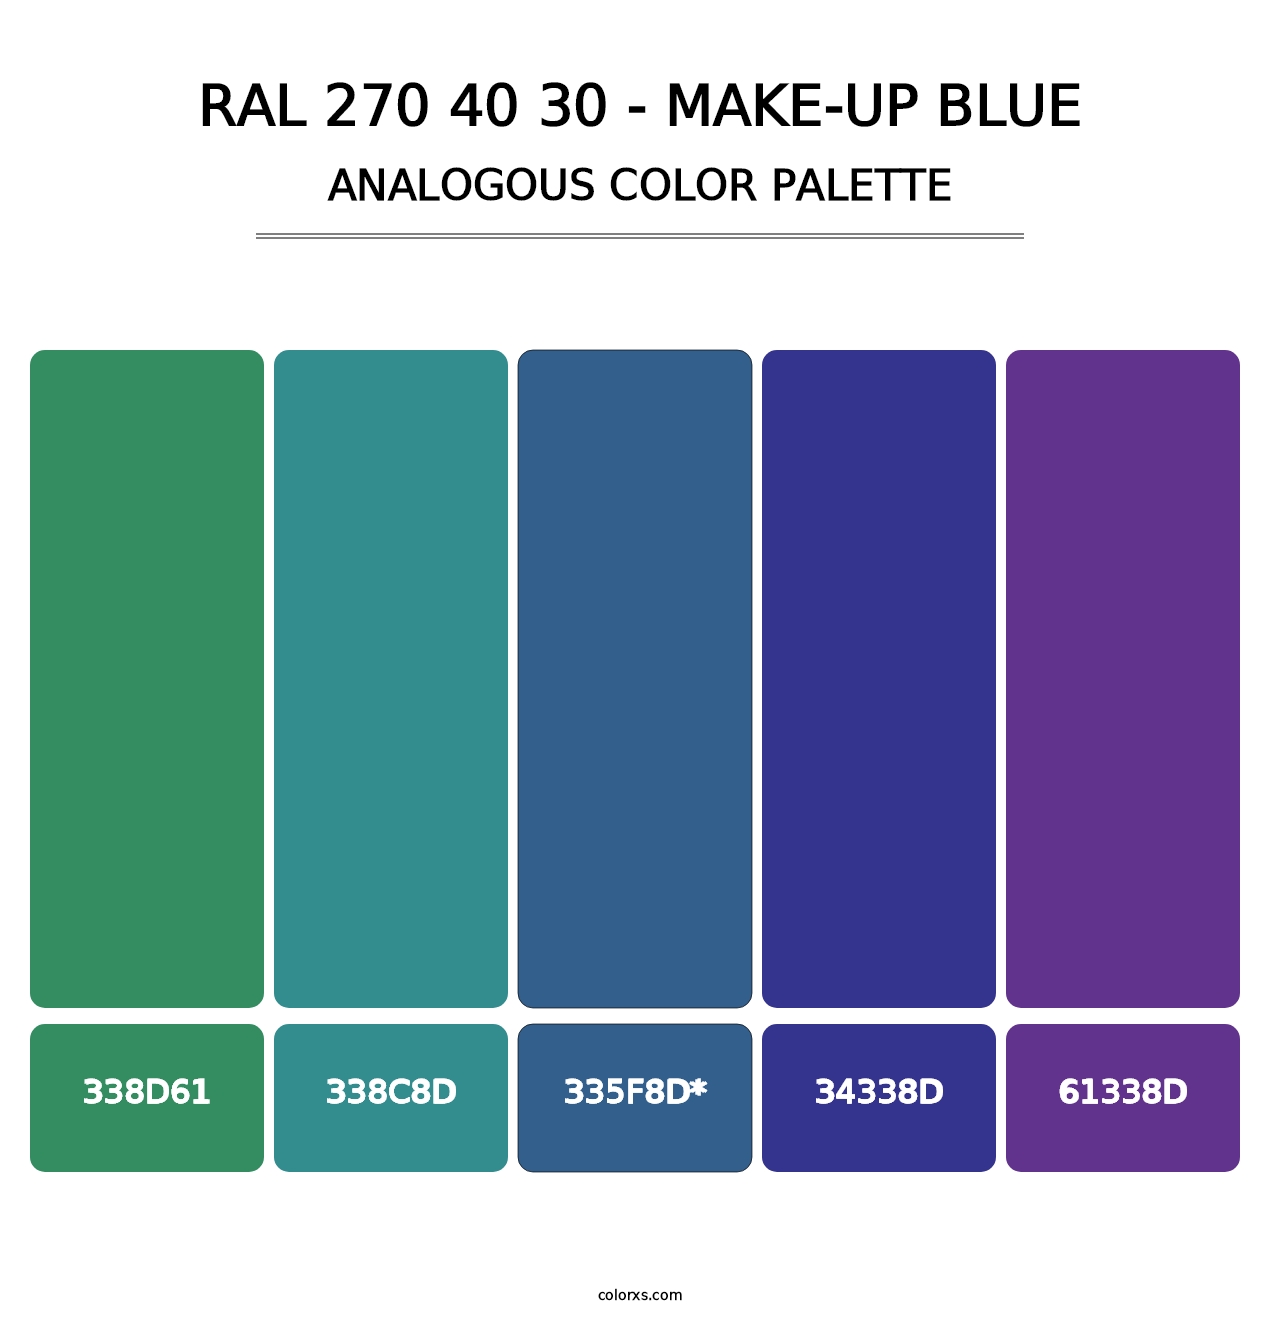 RAL 270 40 30 - Make-Up Blue - Analogous Color Palette